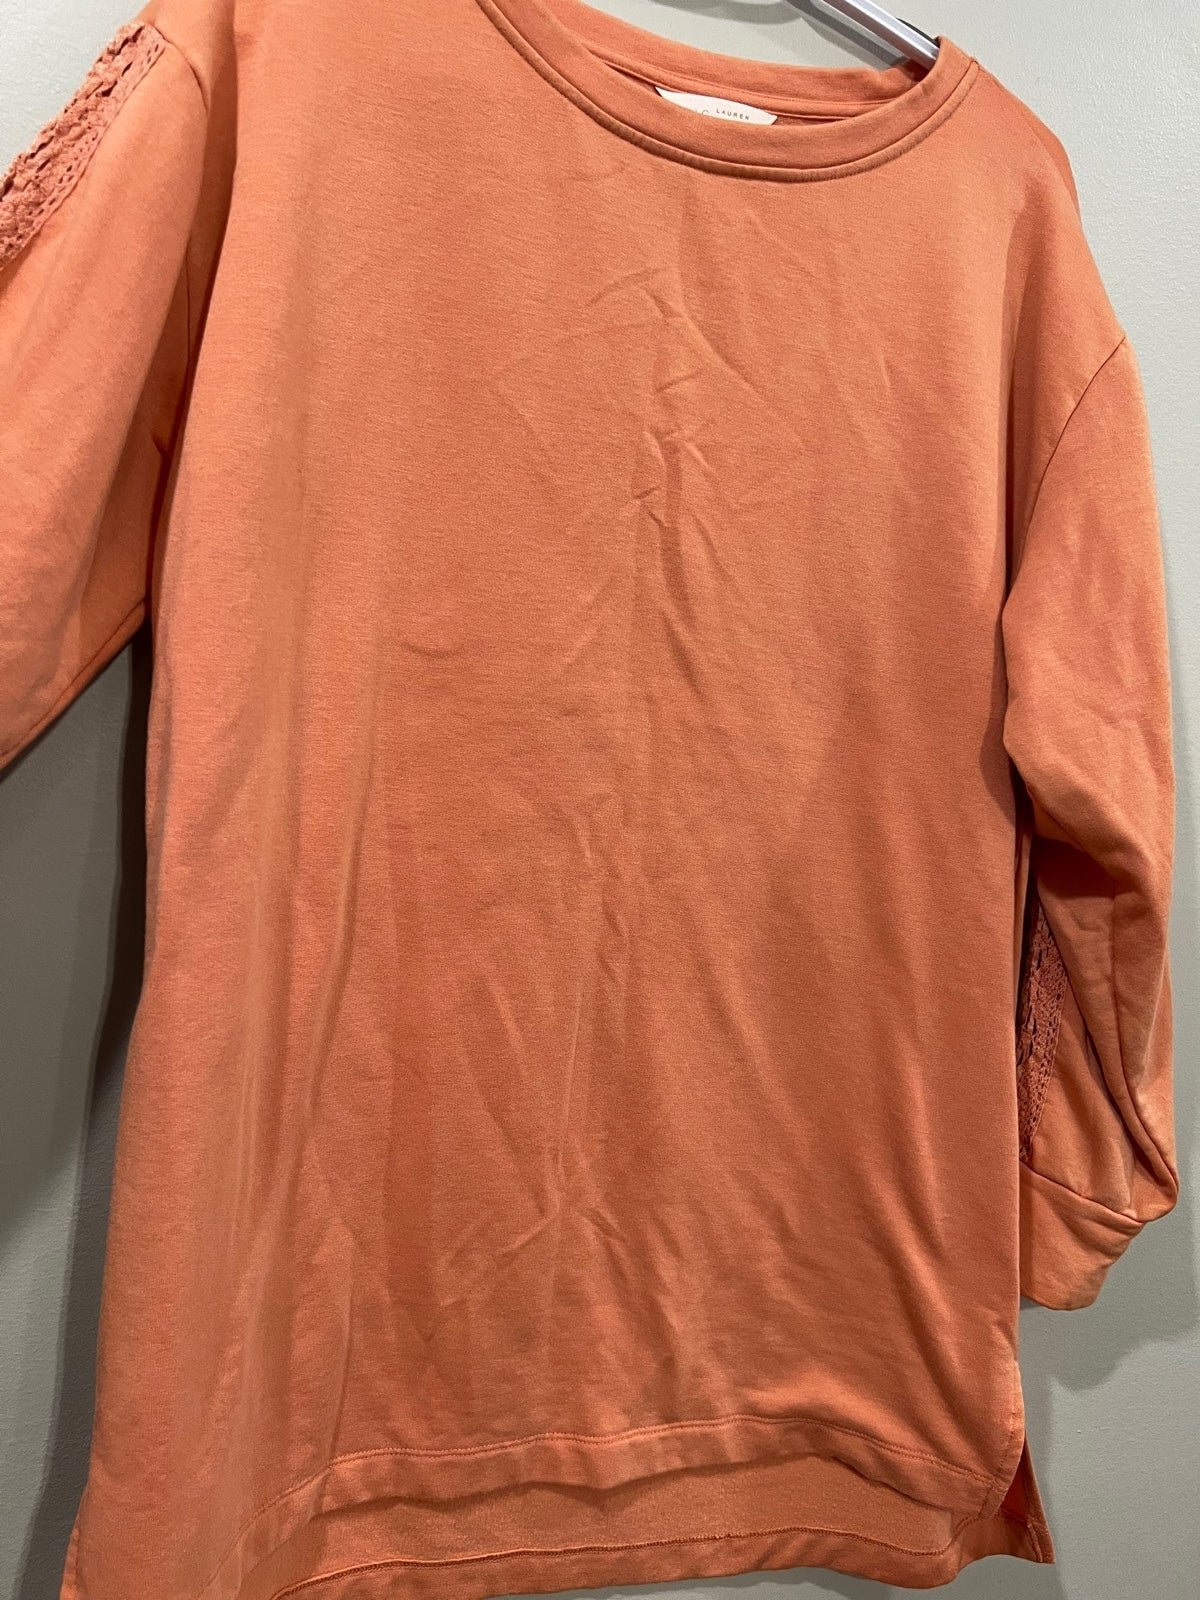 Stylish Lc Orange Fall sweater KS6dTJiuH on sale